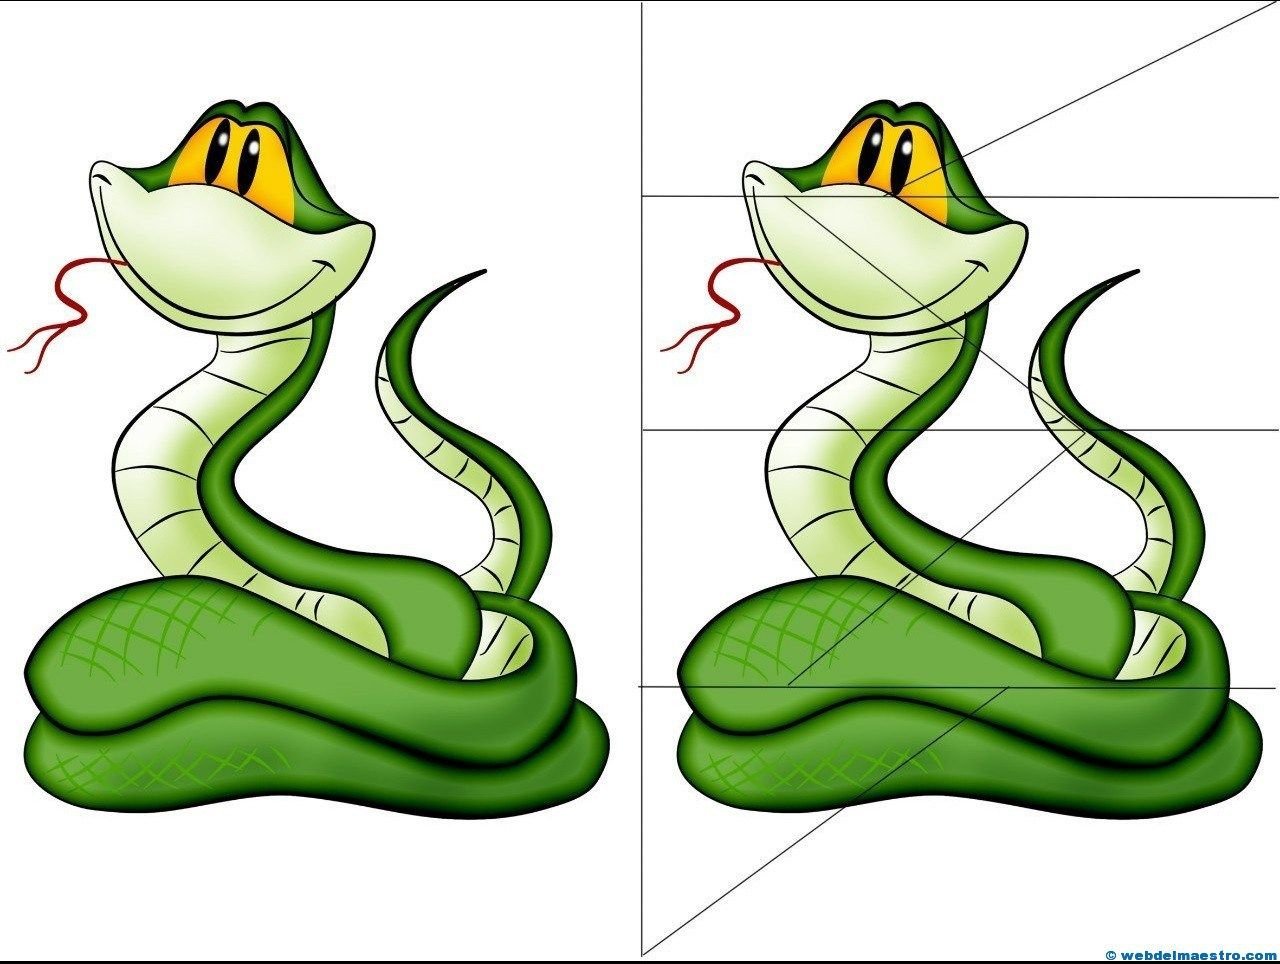 Змей часть 1. Разрезные пазлы для малышей. Змея для детей. Разрезные пазлы для детей 6 лет. Пазлы для детей змея.